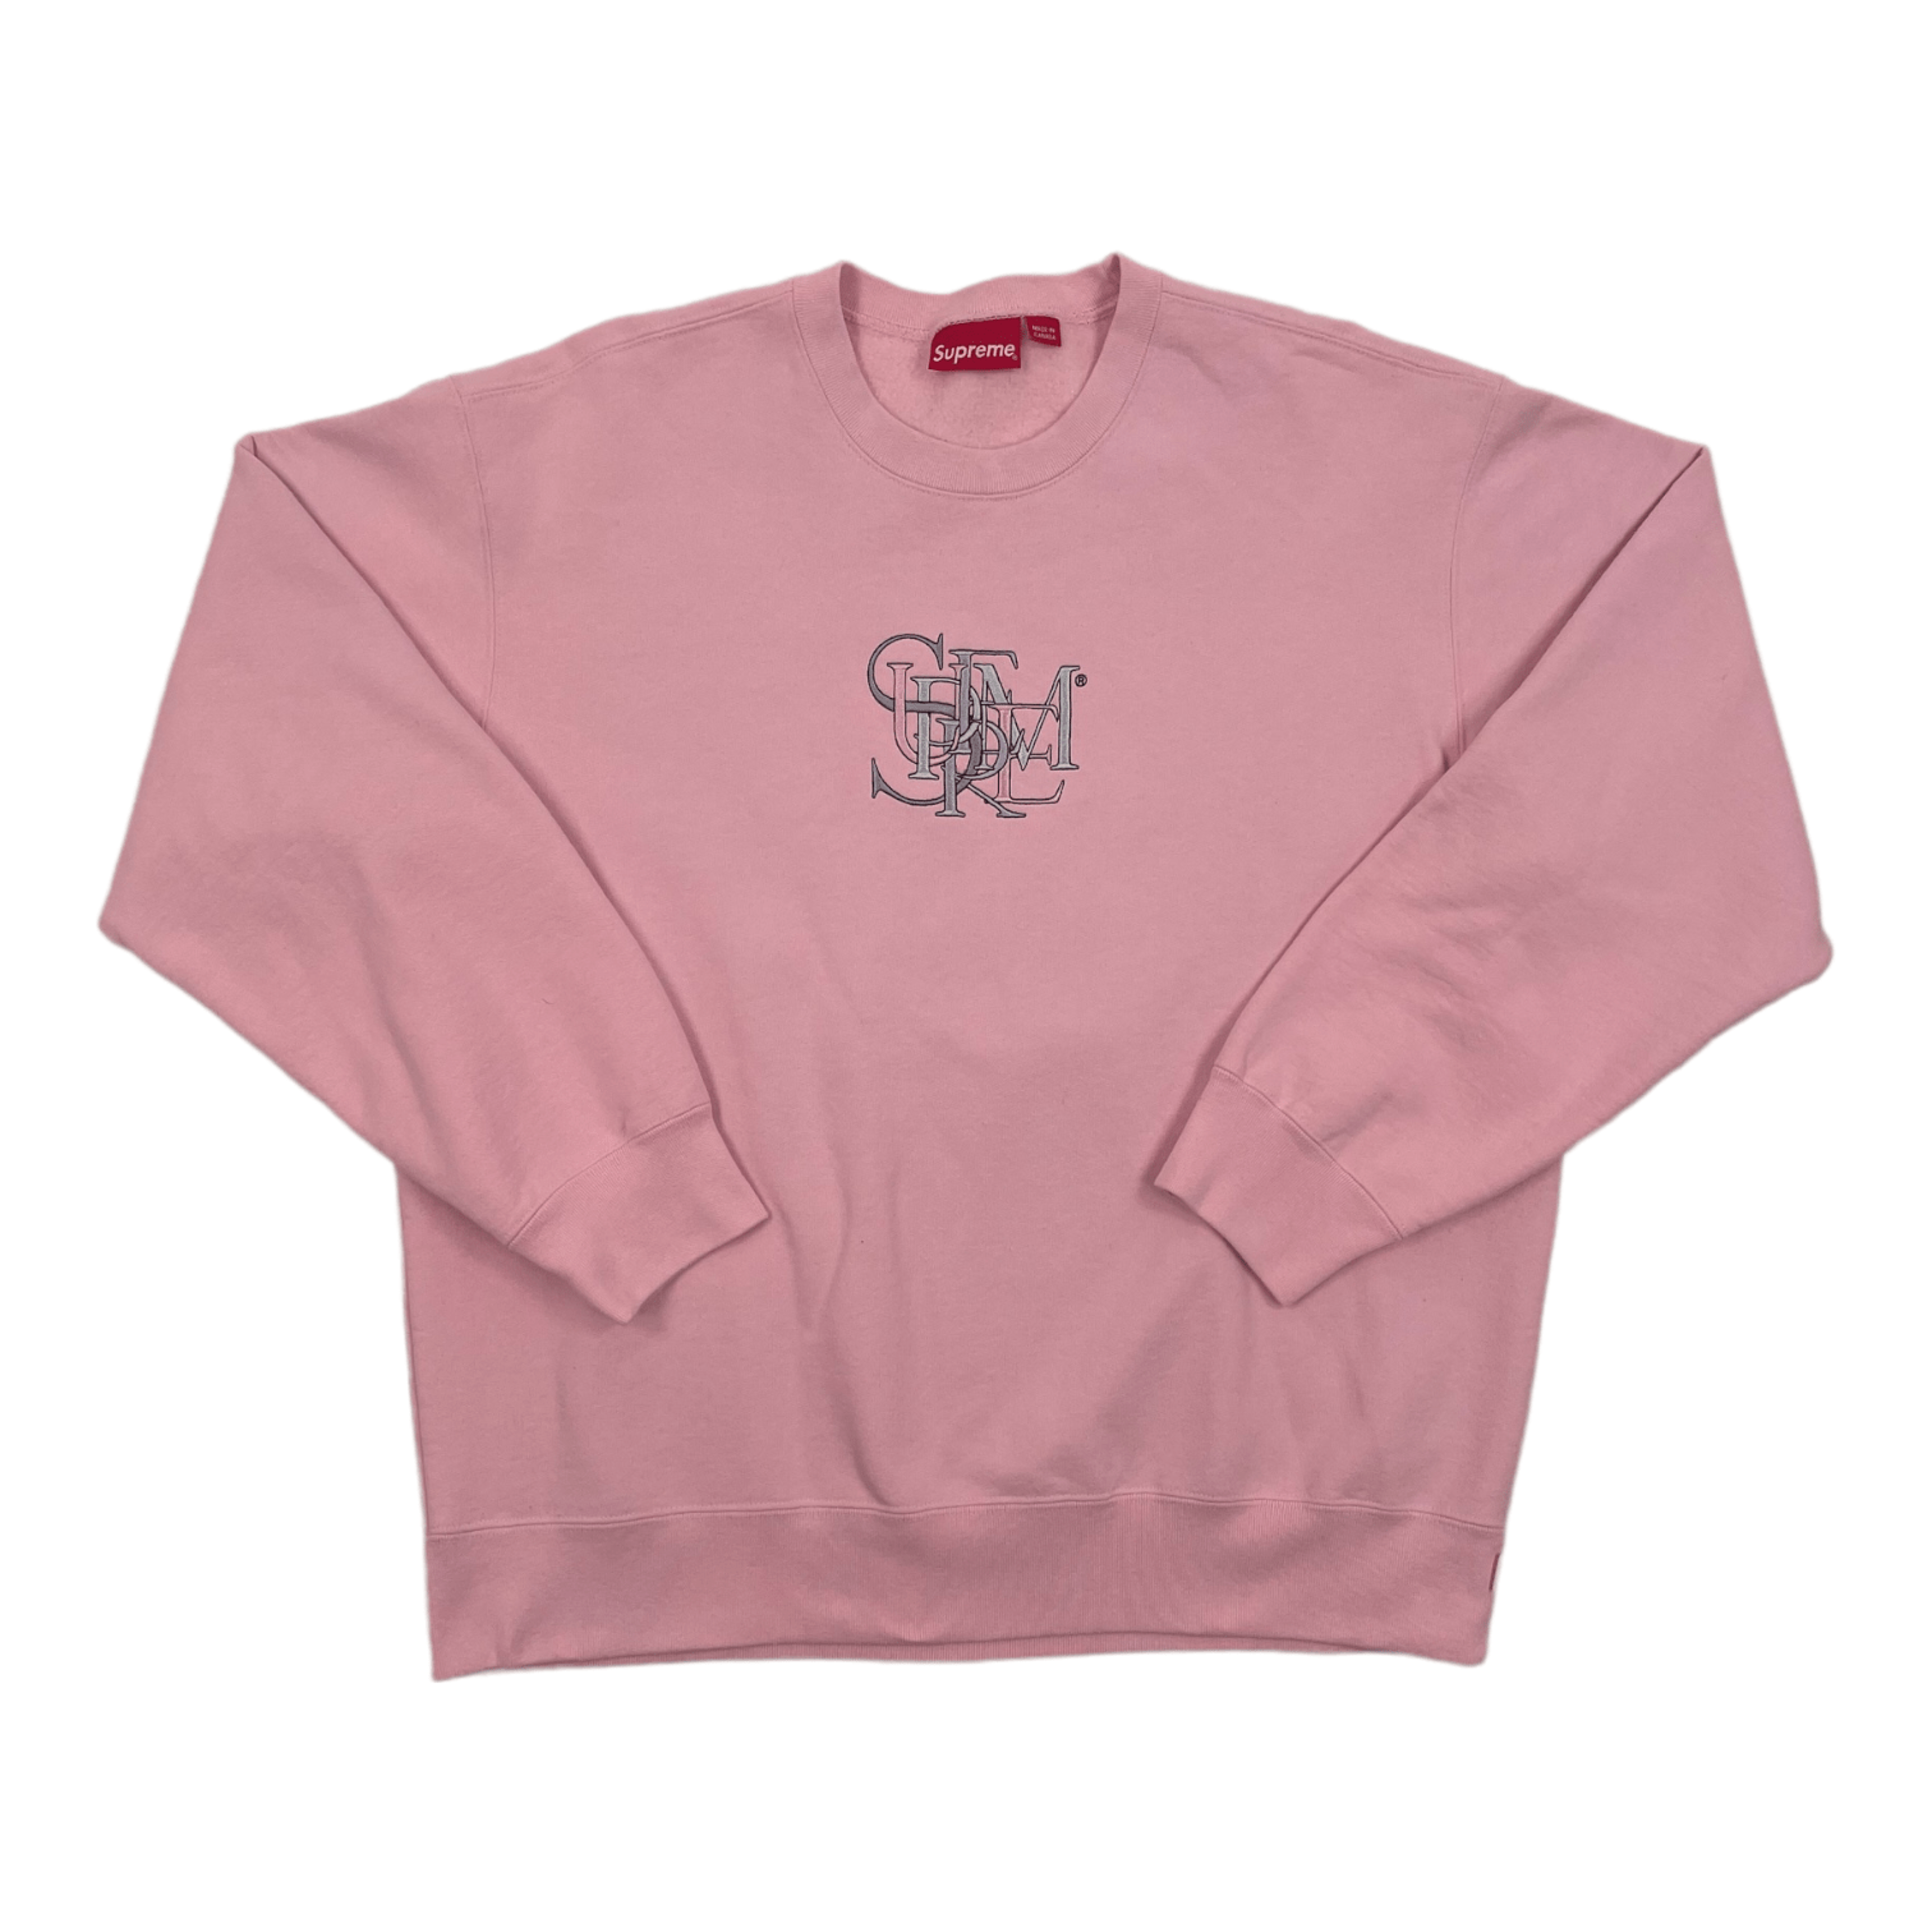 Supreme Overlap Crewneck Sweatshirt Light Pink Pre-Owned